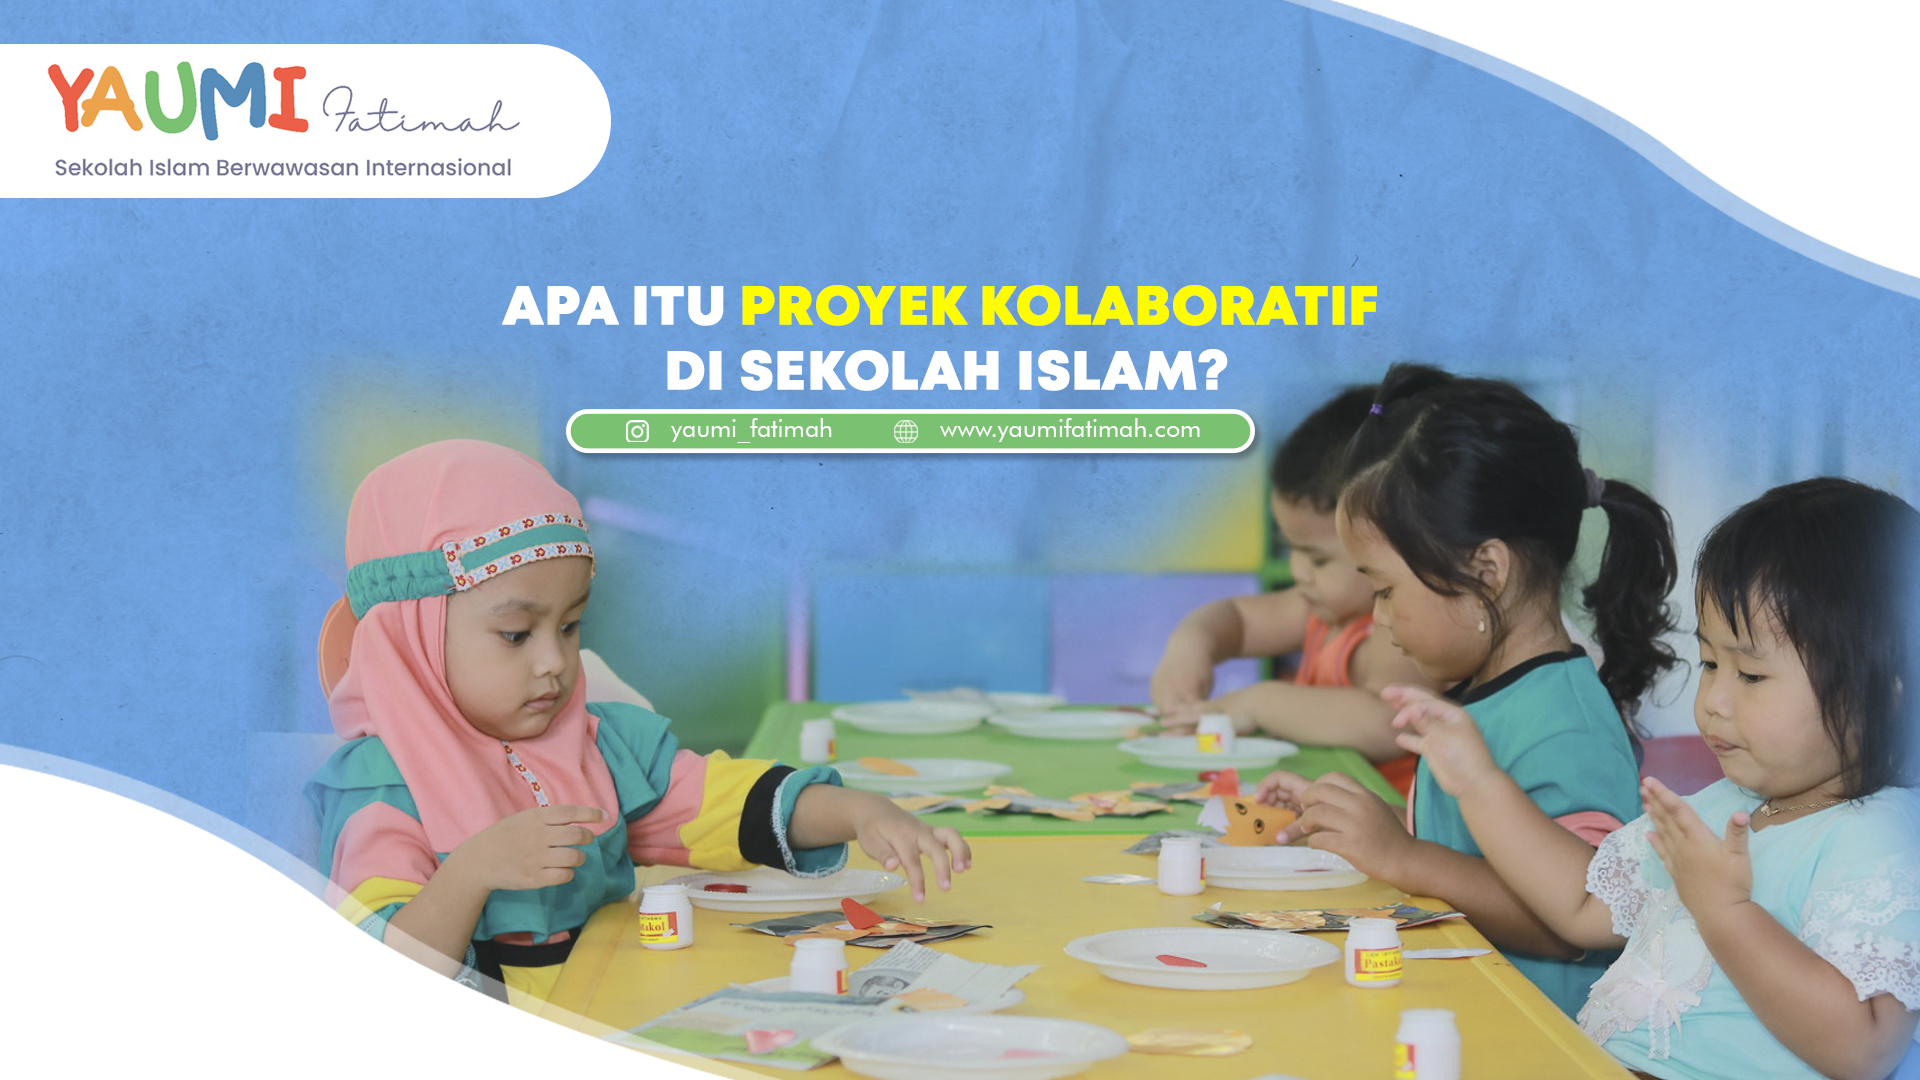 Proyek kolaboratif sekolah islam